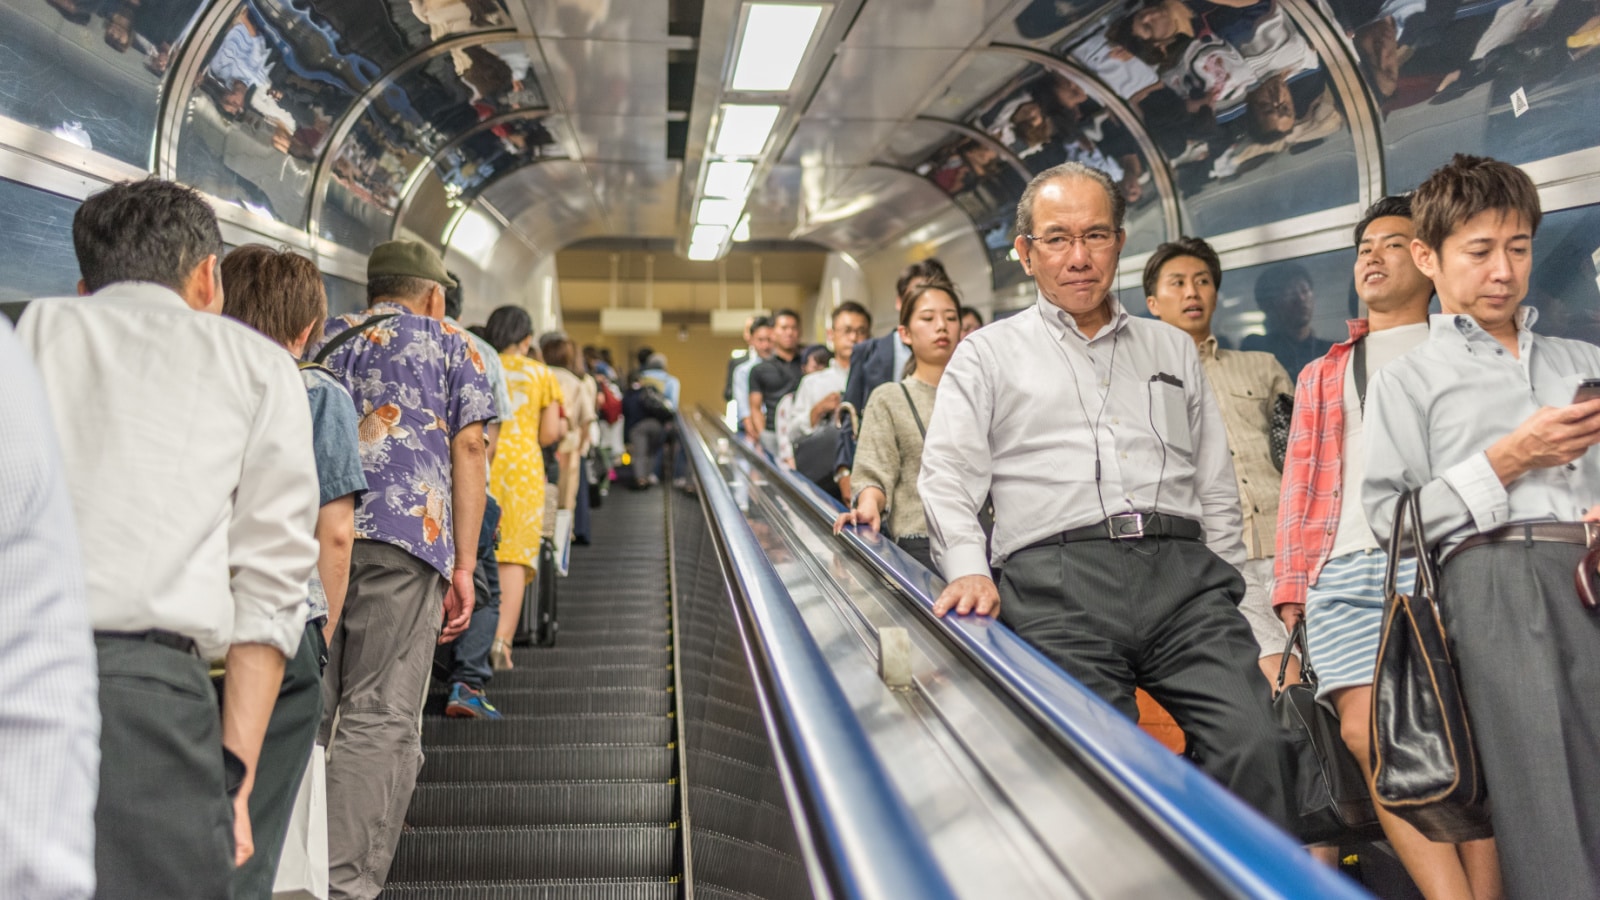 Tokyo, Japan July 15, 2016 - Middle aged businessman commutes via Tokyo subway system.